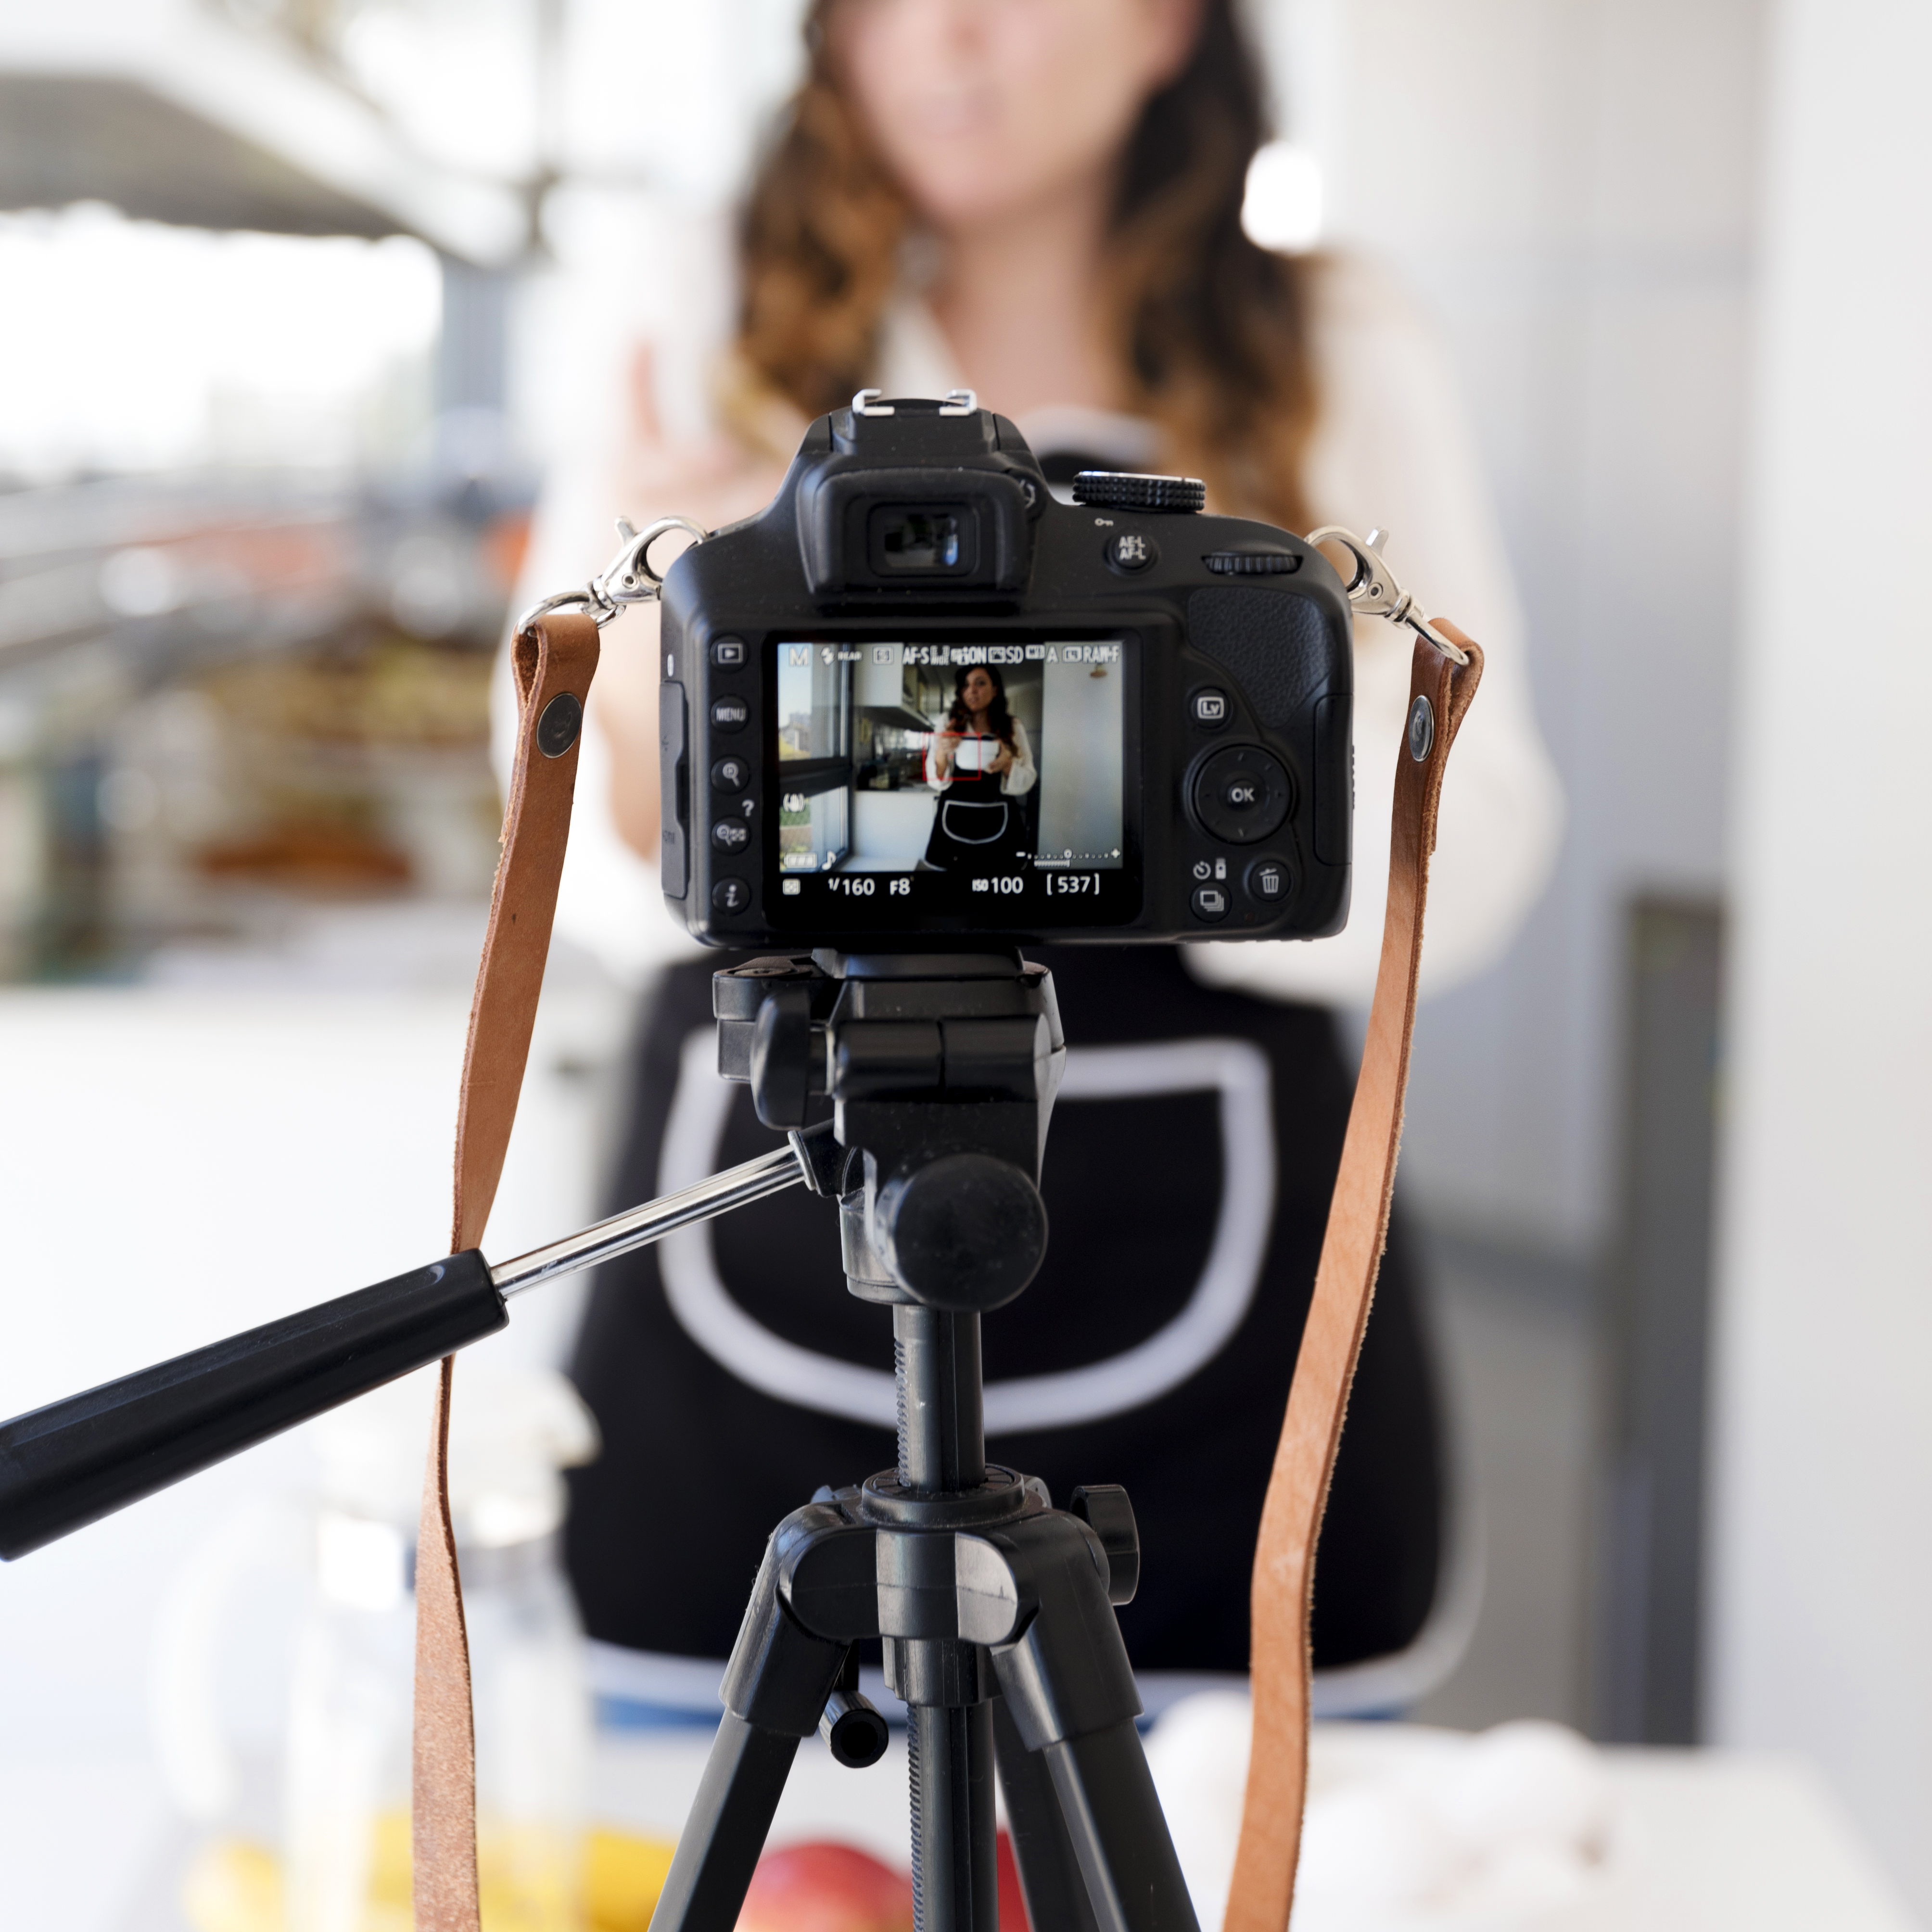 camera-filming-woman-kitchen